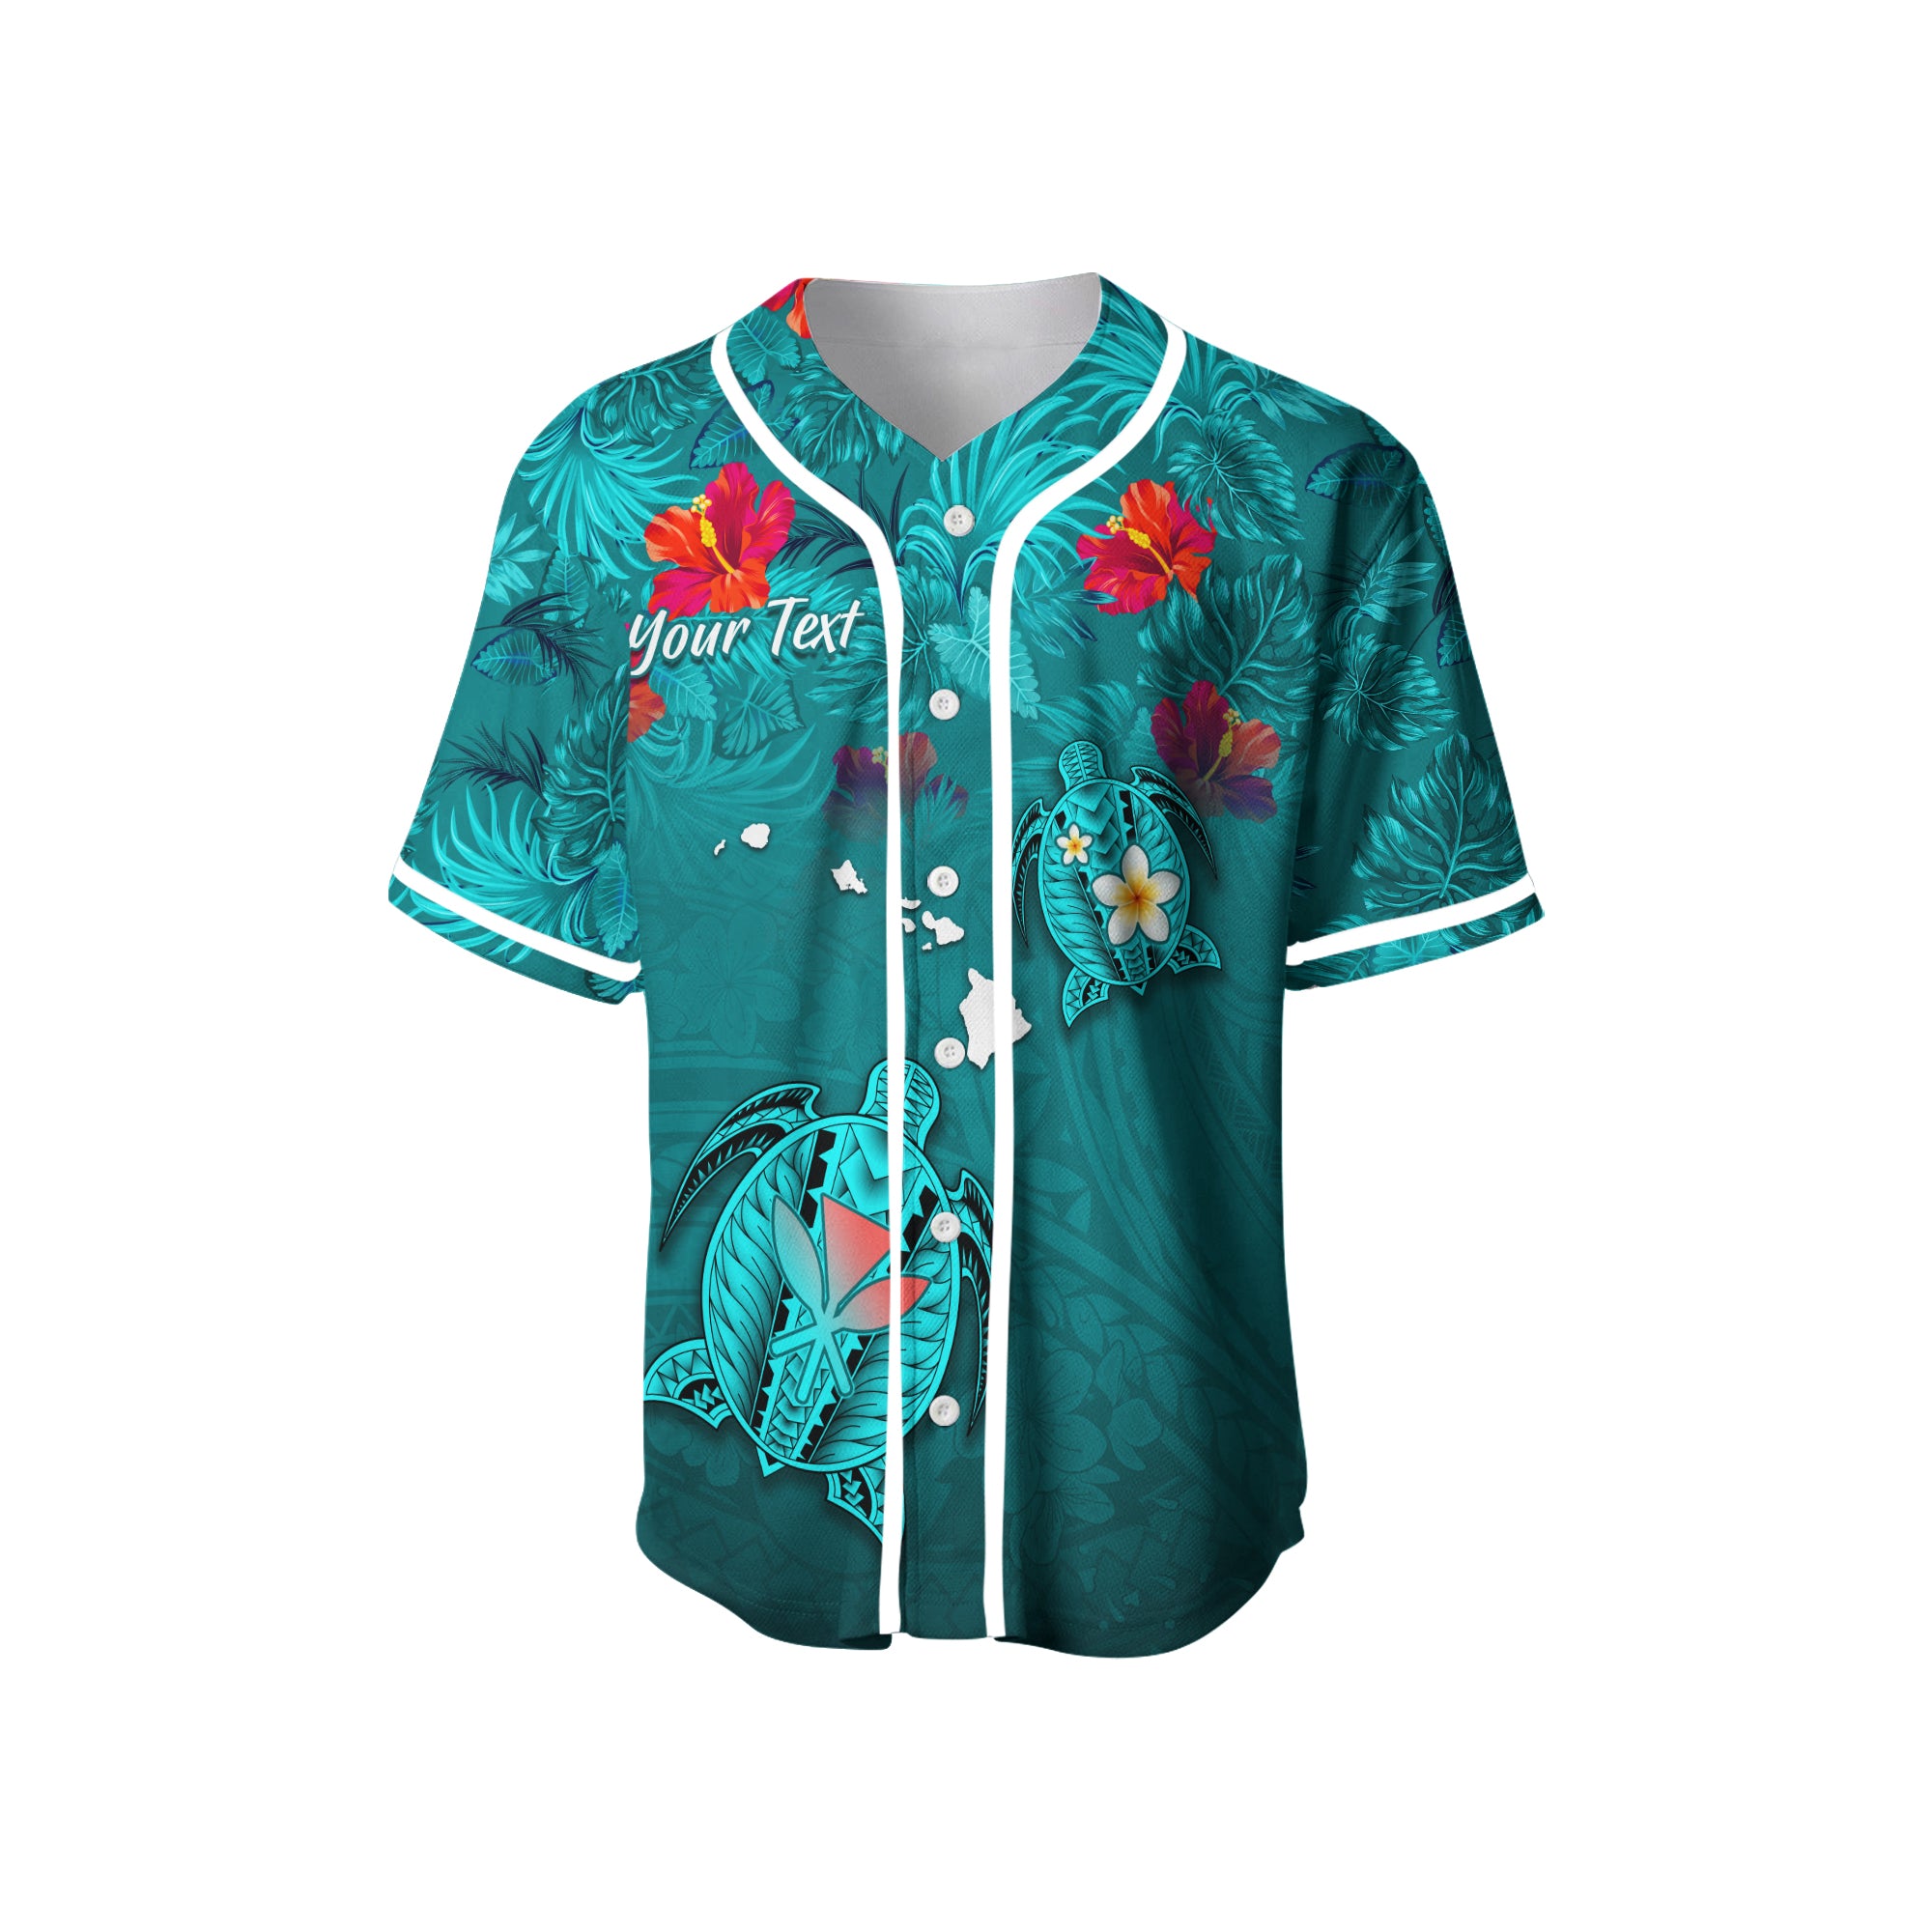 (Custom Personalised) Hawaiian Islands Baseball Jersey - Hawaii Tropical Flowers and Turtles Turquoise LT13 - Polynesian Pride